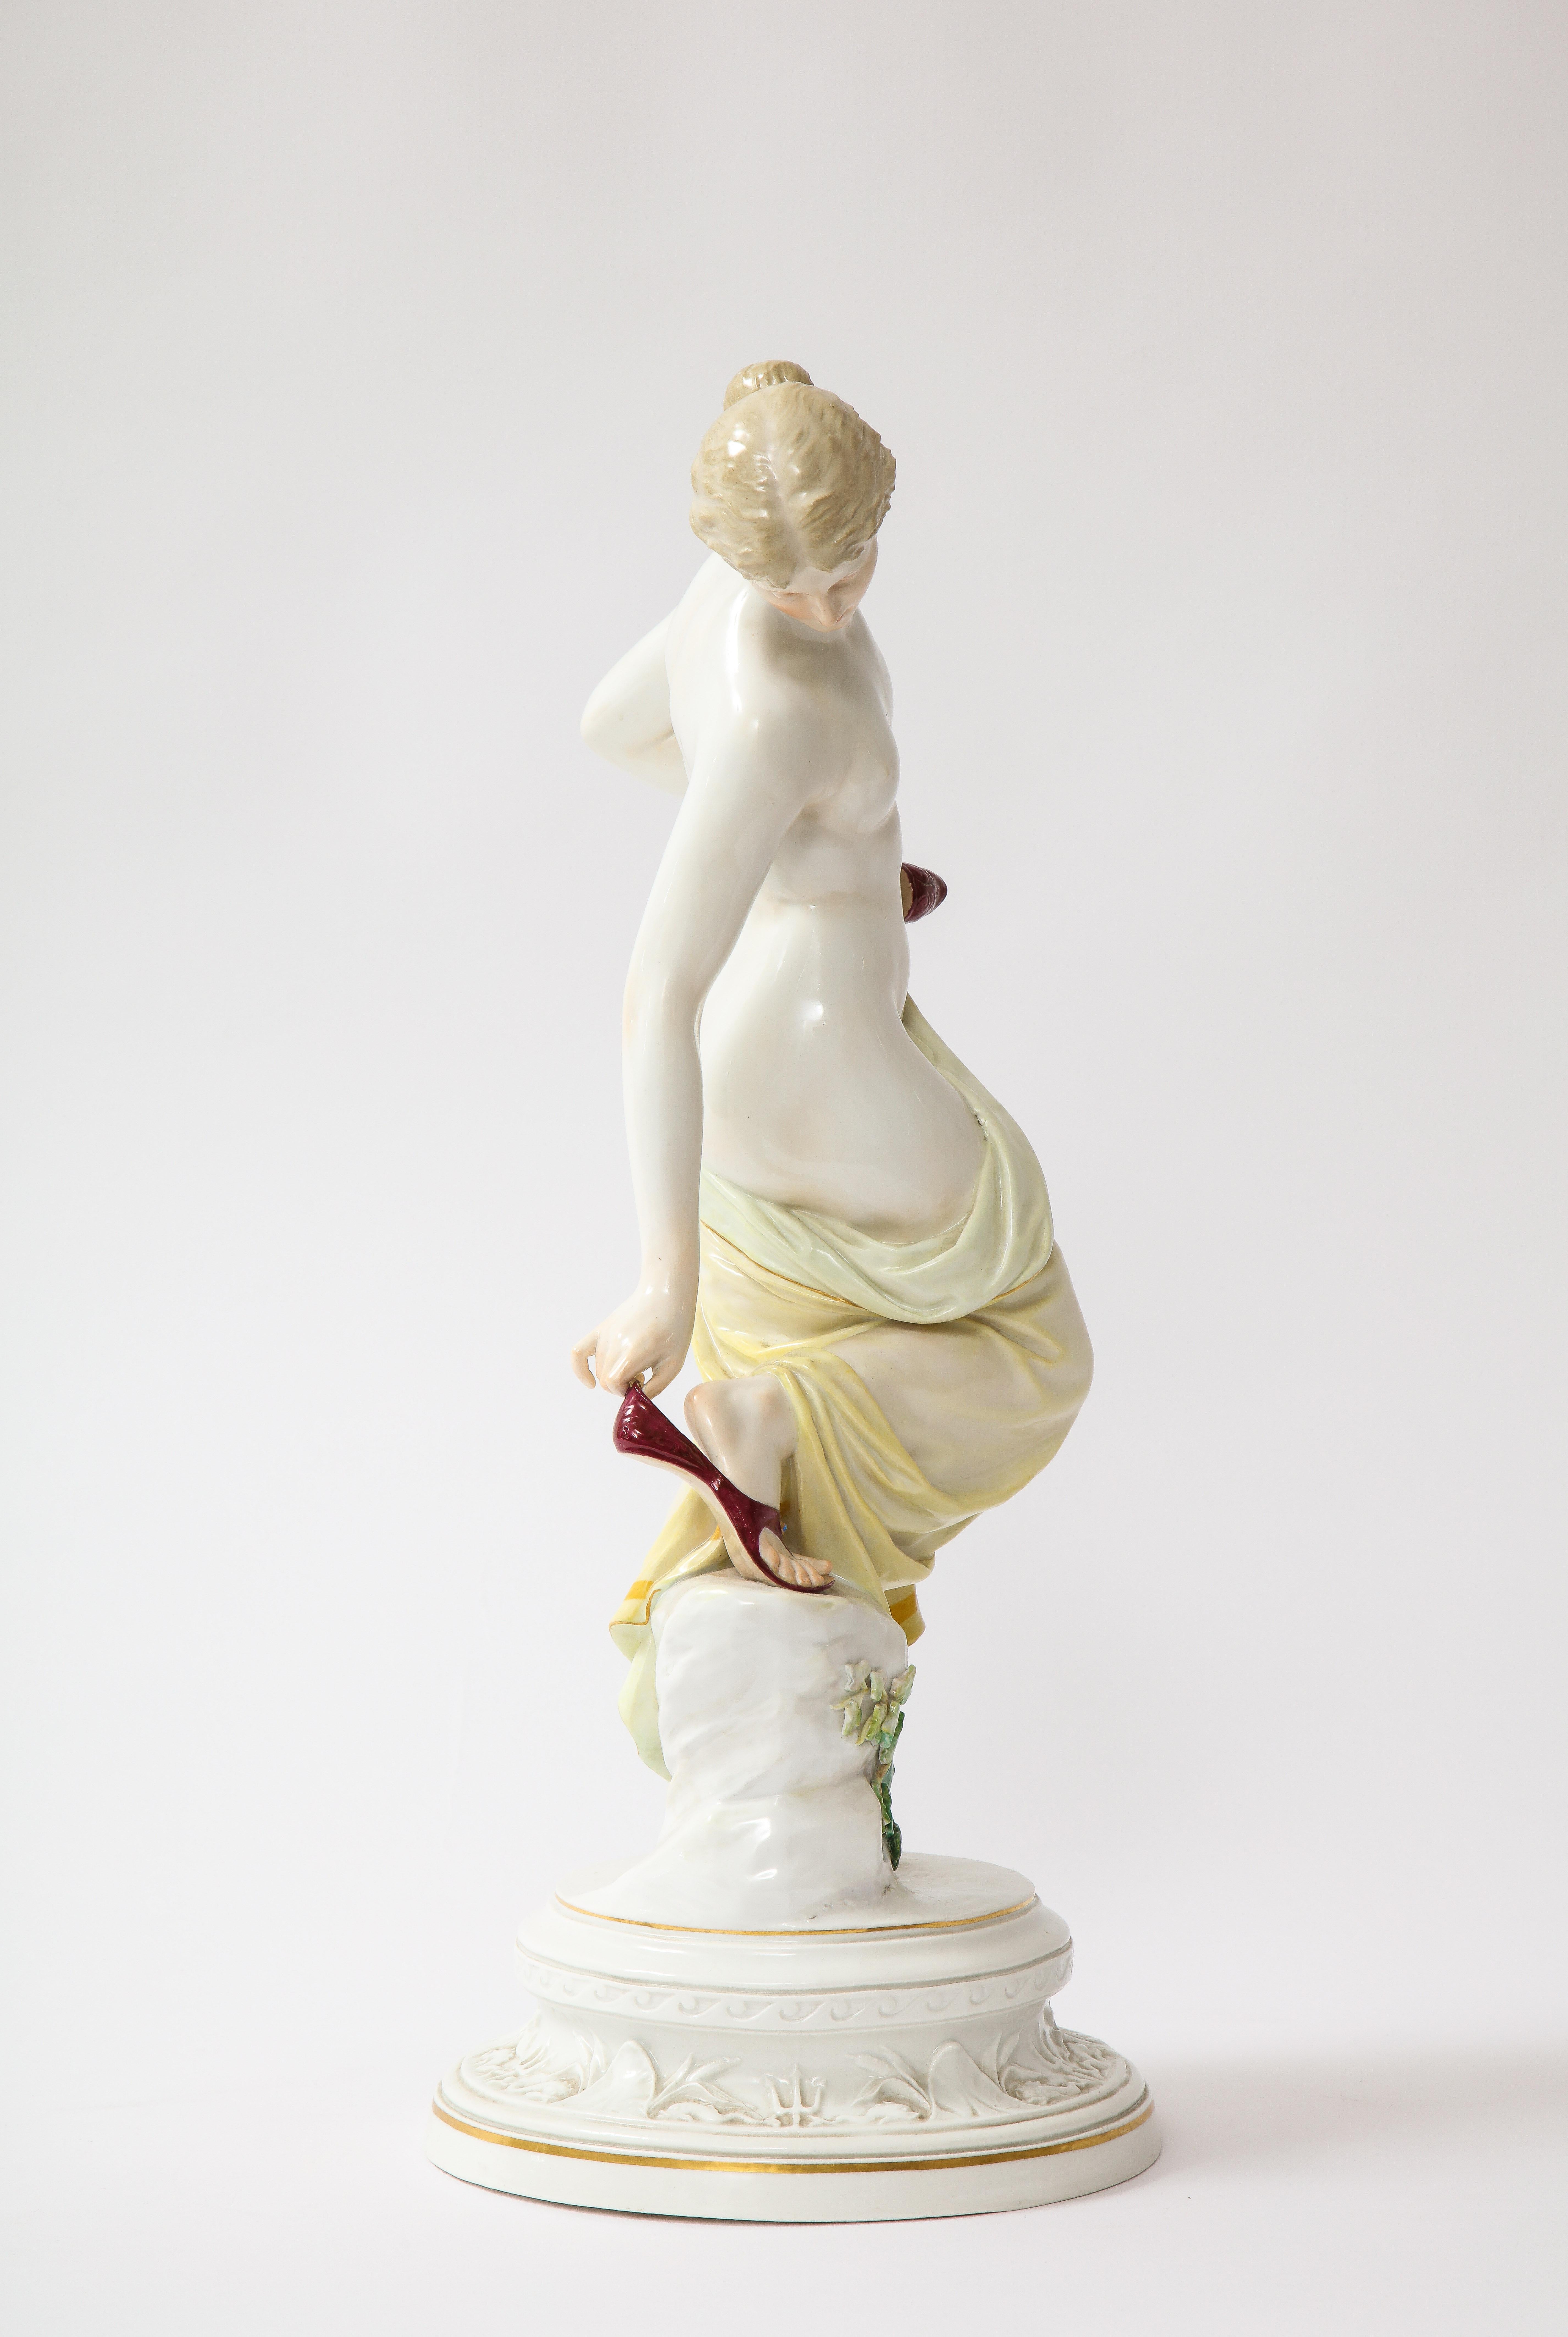 Other A 19th C. Meissen Porcelain Female Nude Figurine After The Bath, R. Ockelmann For Sale